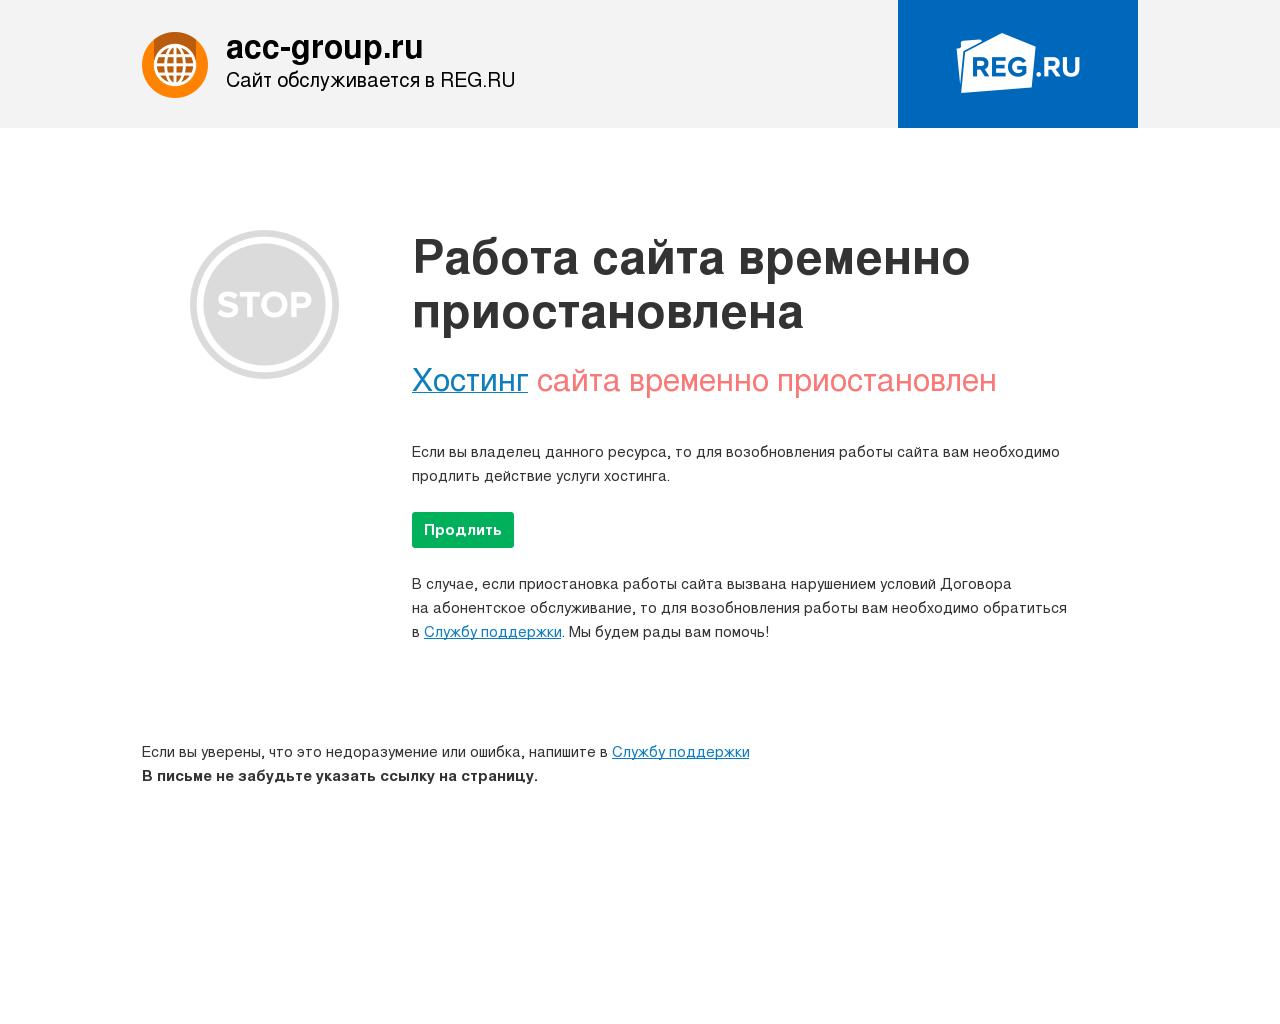 Изображение сайта acc-group.ru в разрешении 1280x1024